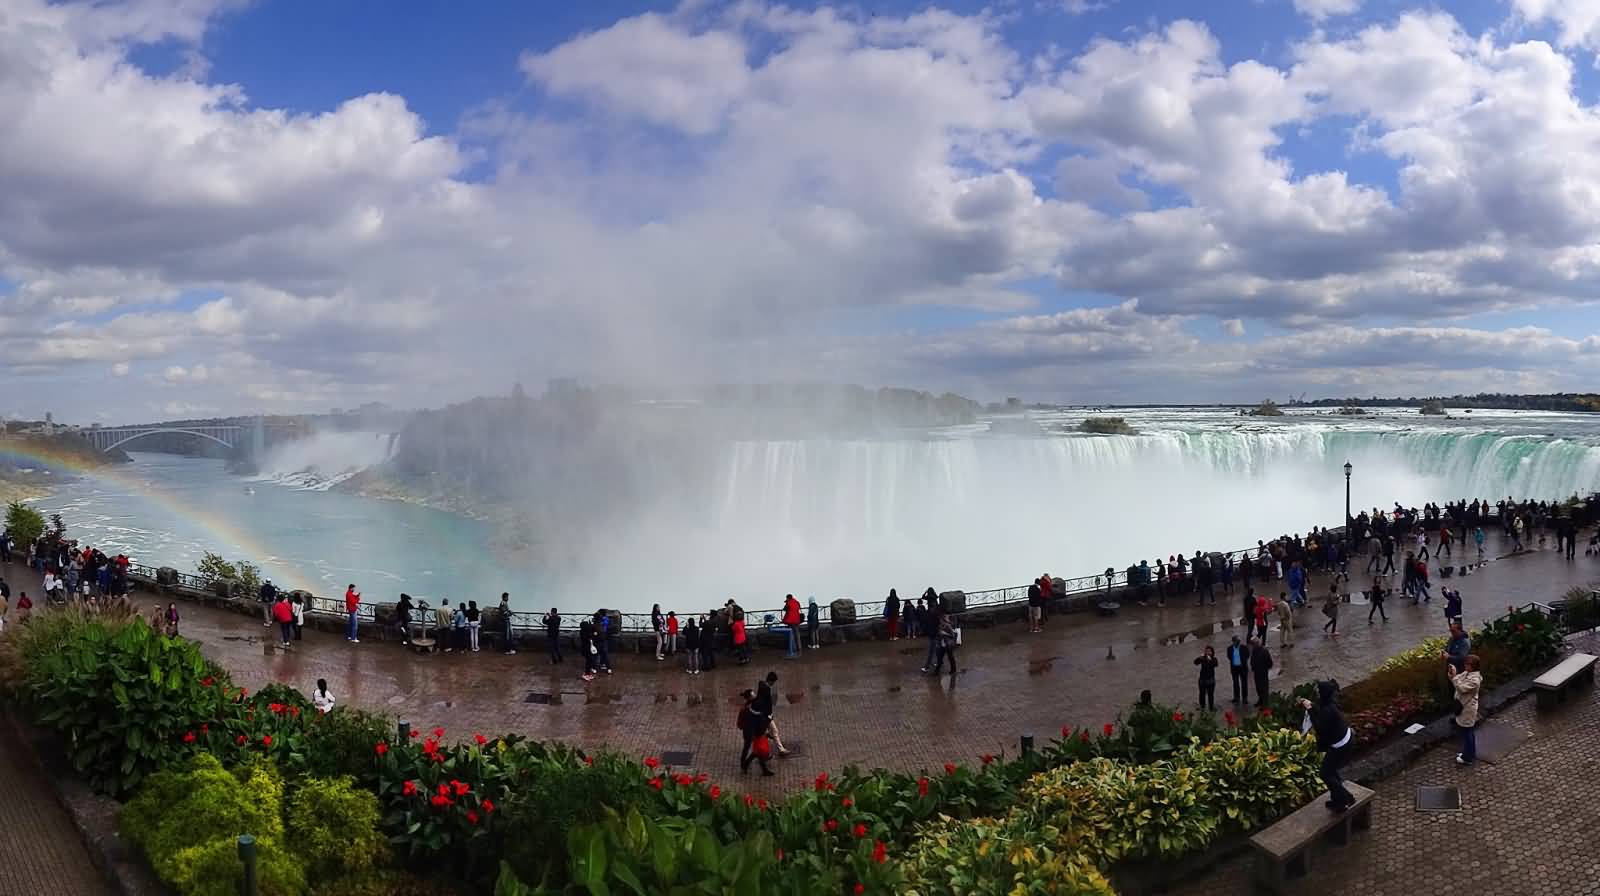 The Niagara Falls Picture